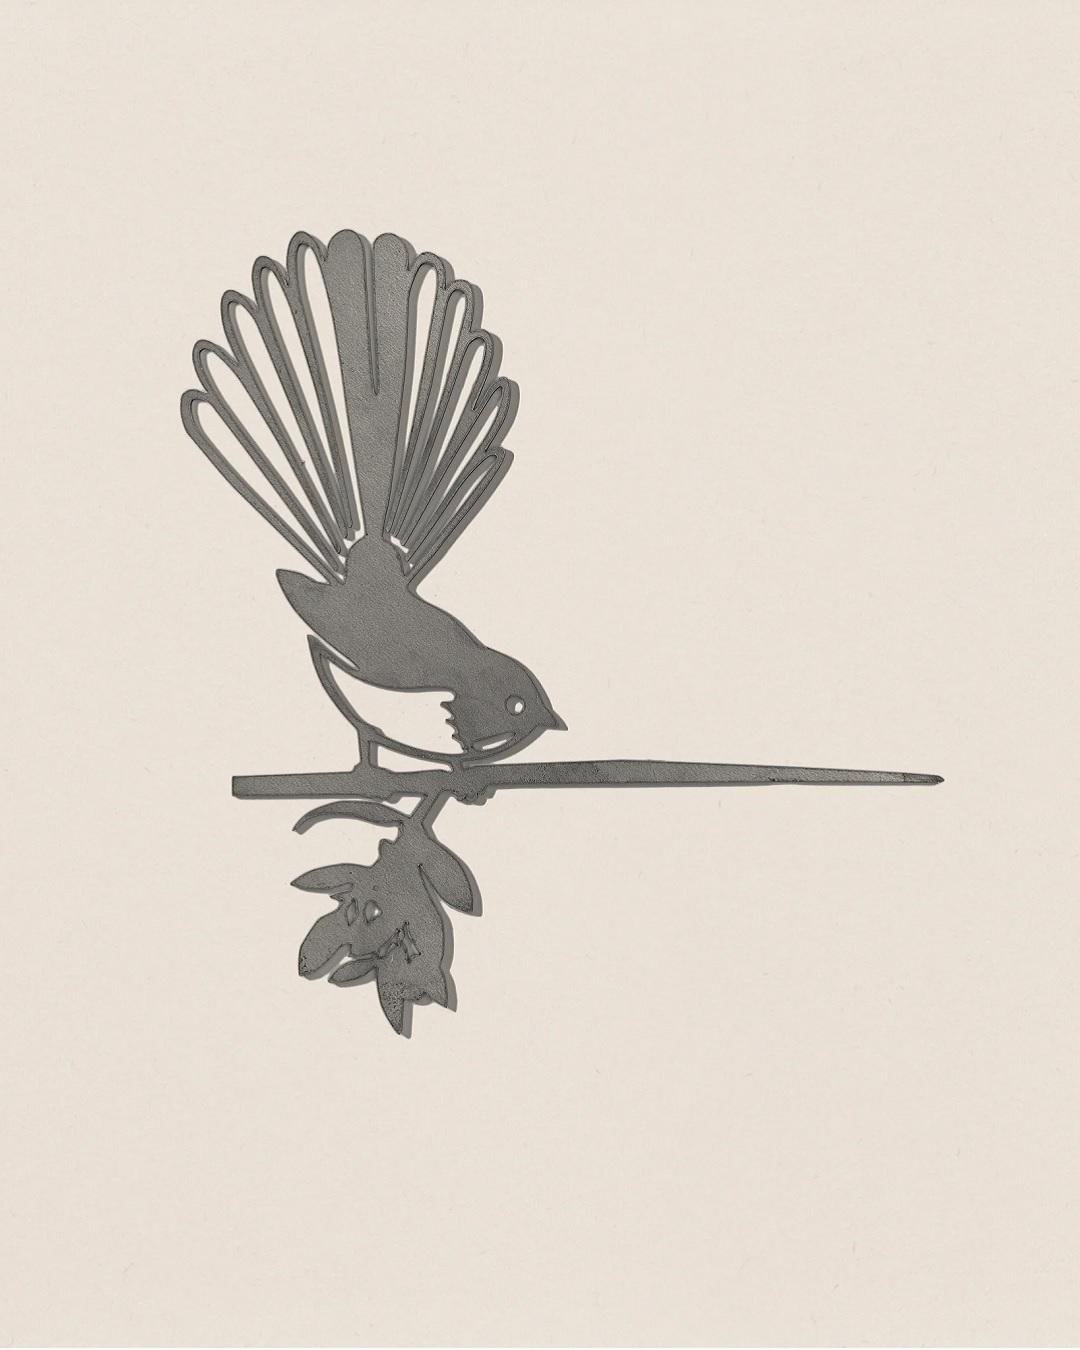 Metal piwakawaka shaped bird